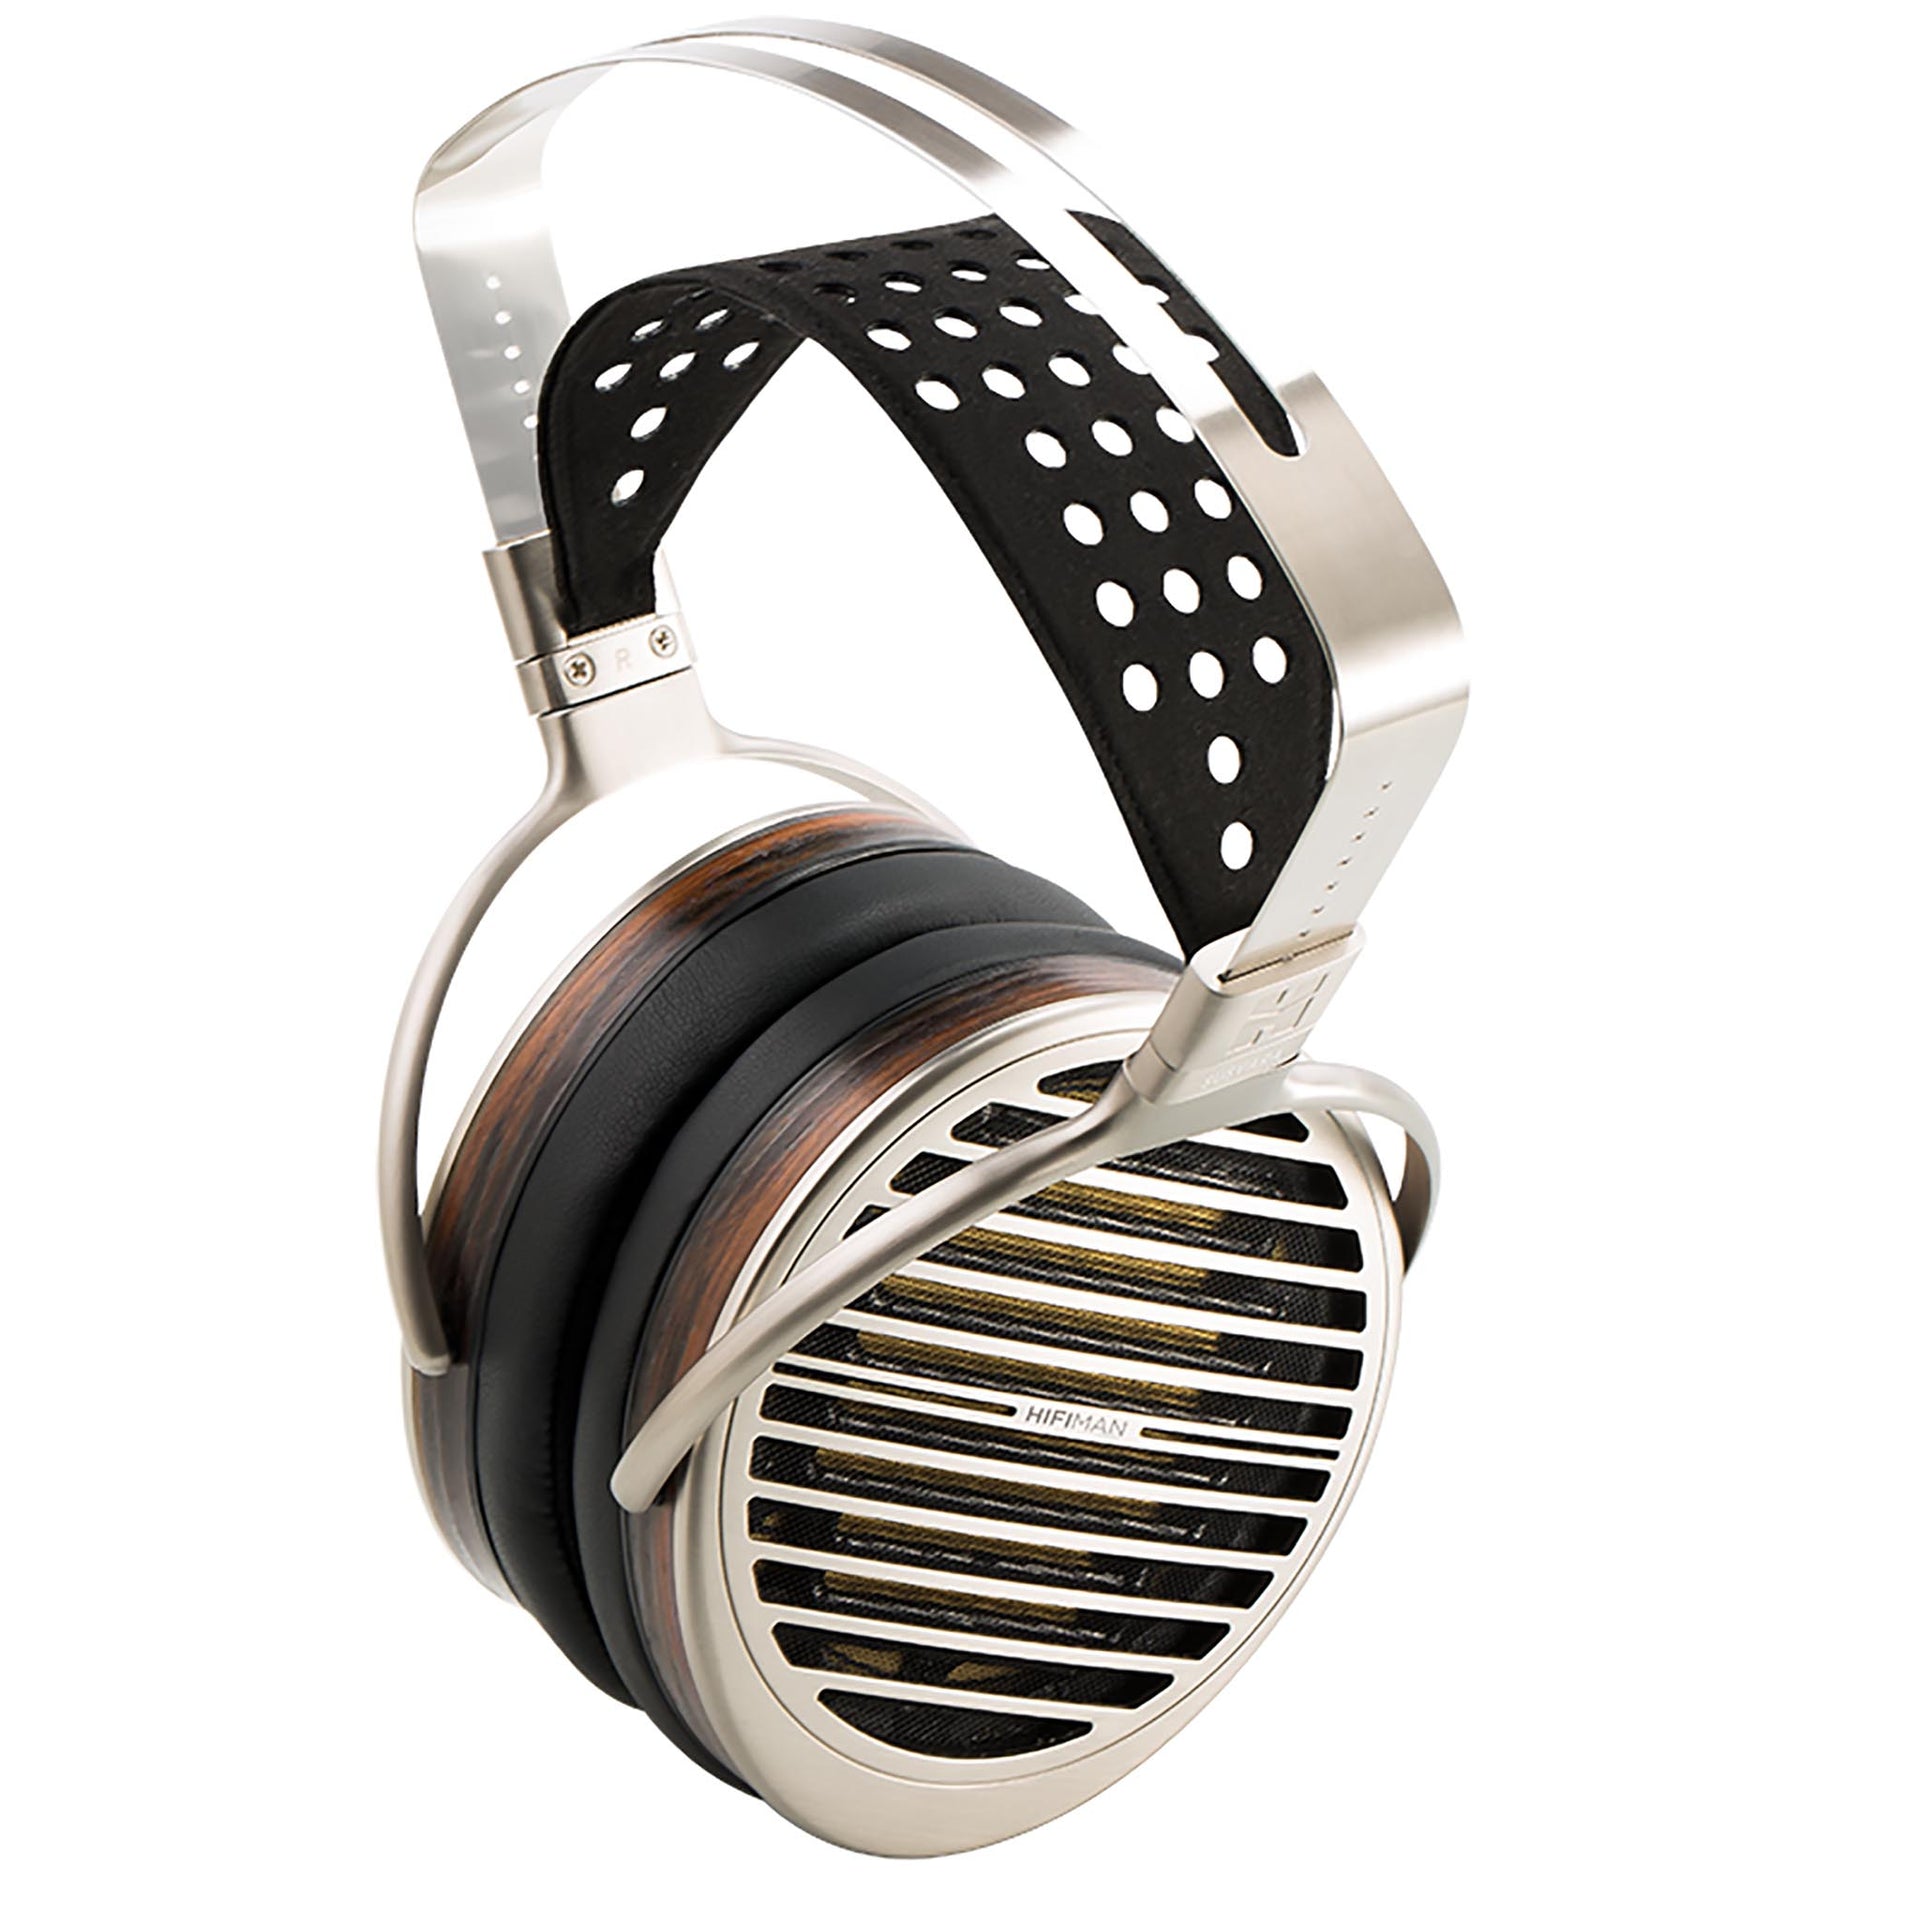 Hifiman Susvara Planar Magnetic Headphones – Upscale Audio